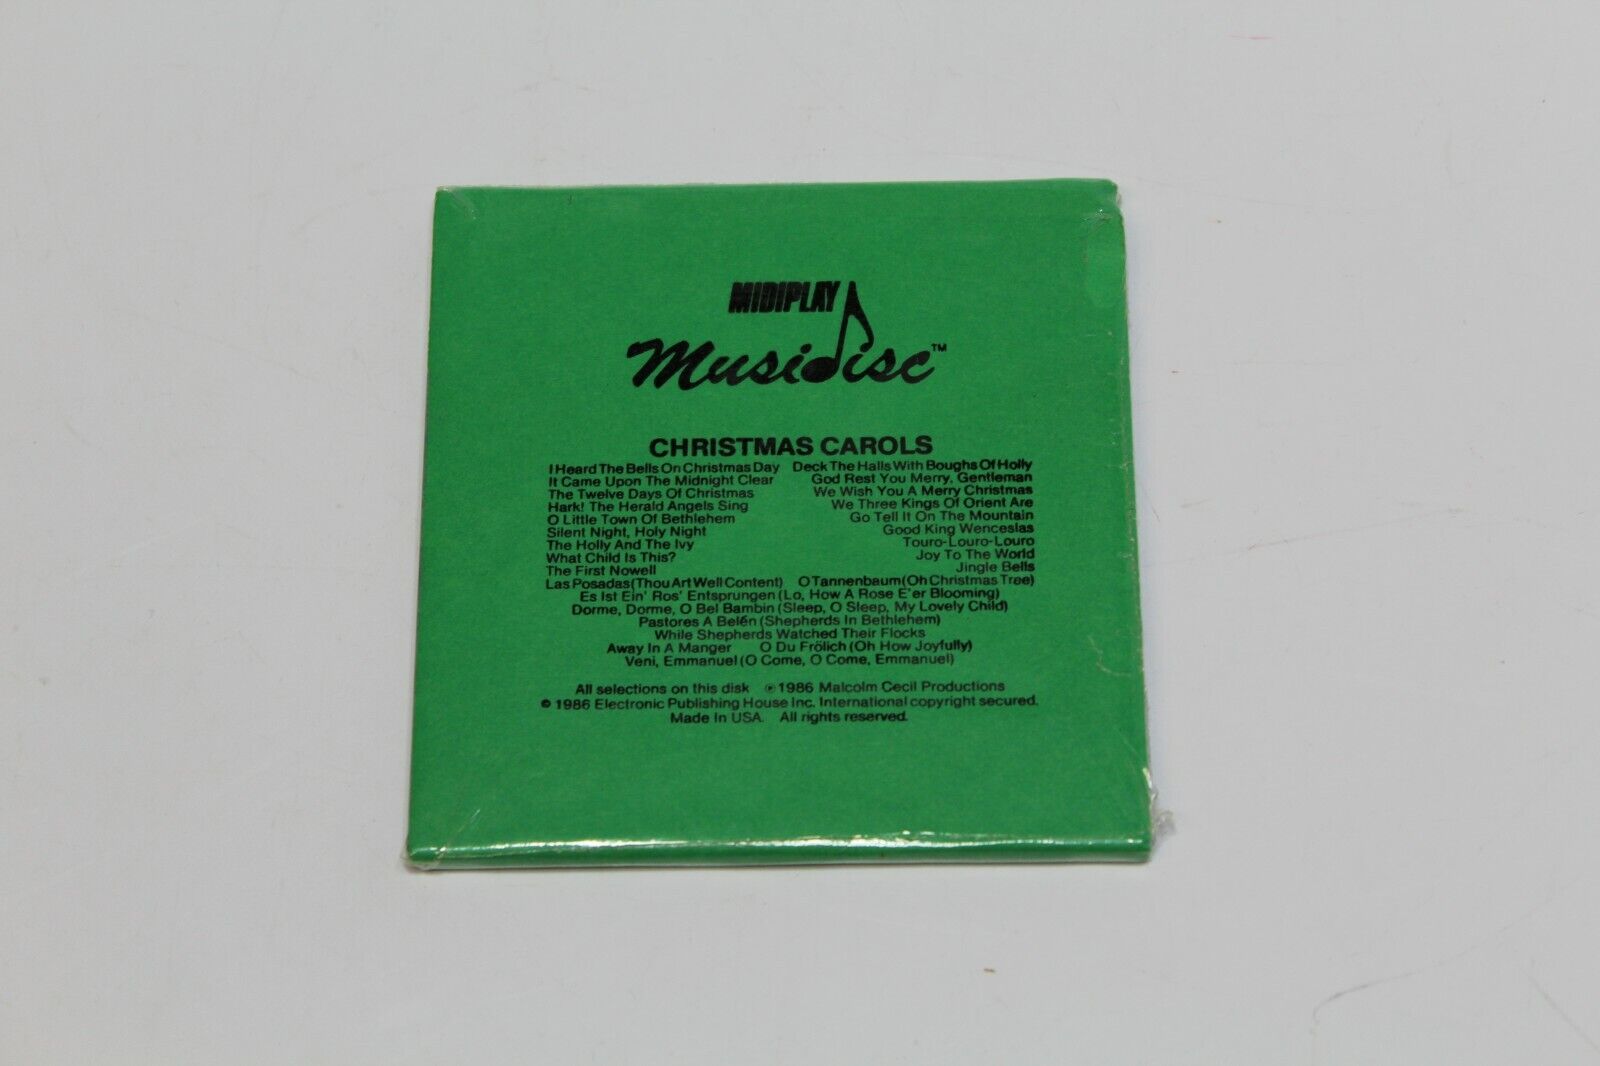 VTG MidiPlay MusicDisc Christmas Carols Vol 1 - 1986 - NEW - Factory Sealed